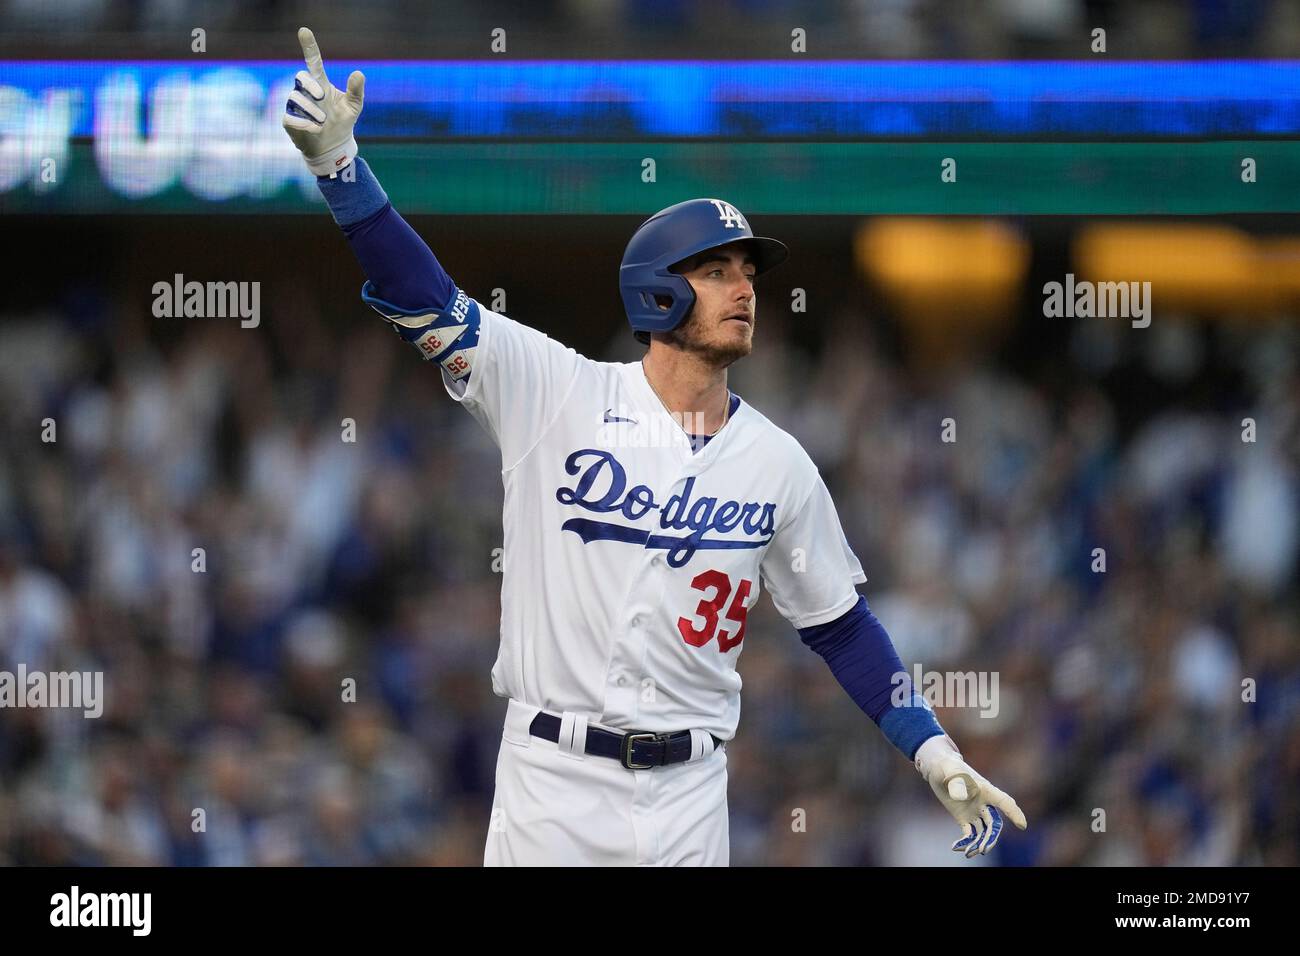 LOS ANGELES, CA - JUNE 03: Los Angeles Dodgers center fielder Cody